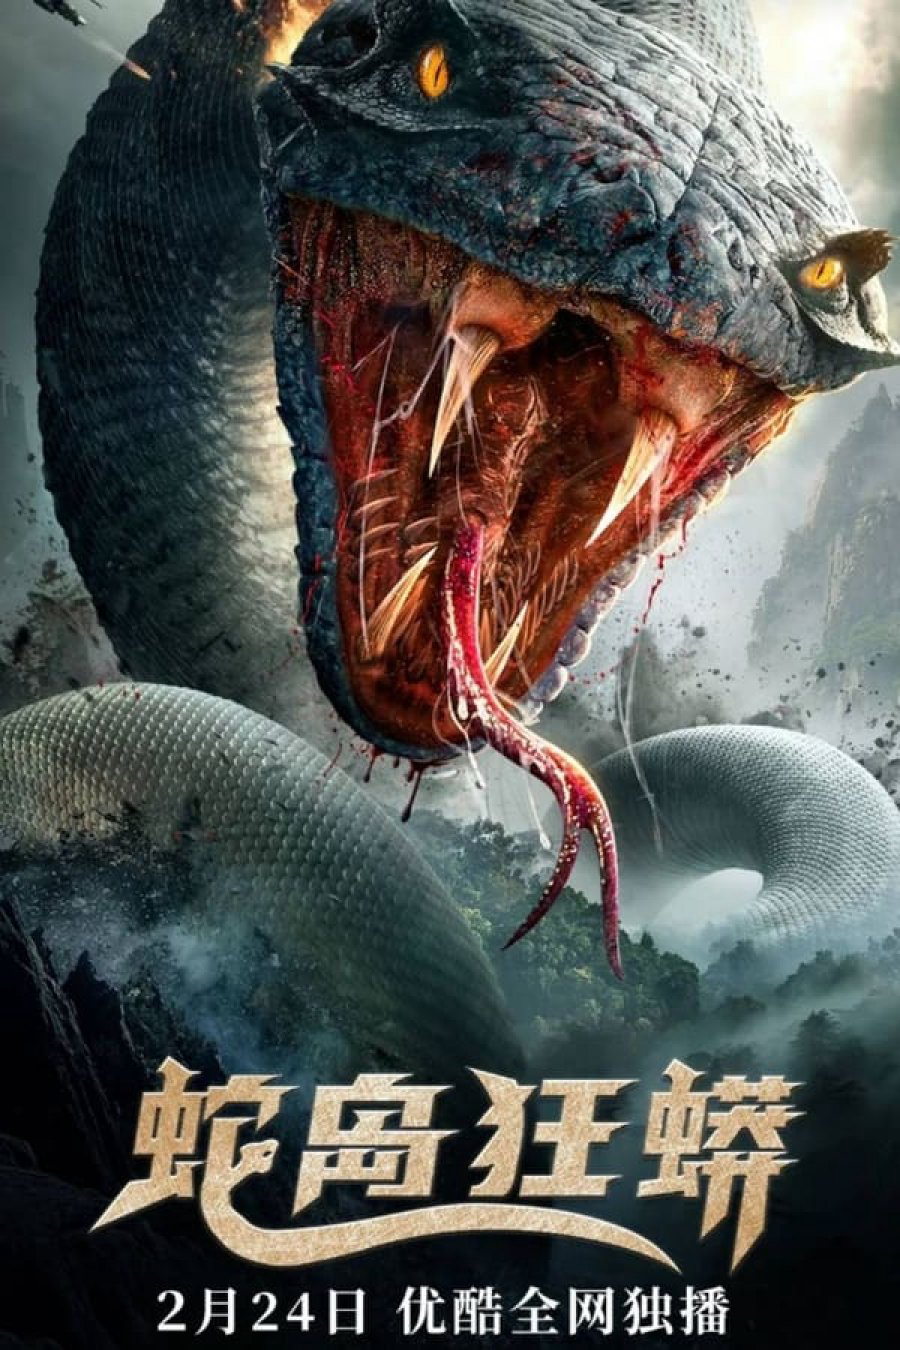 Poster Phim Đảo Rắn (Snake Island Python)